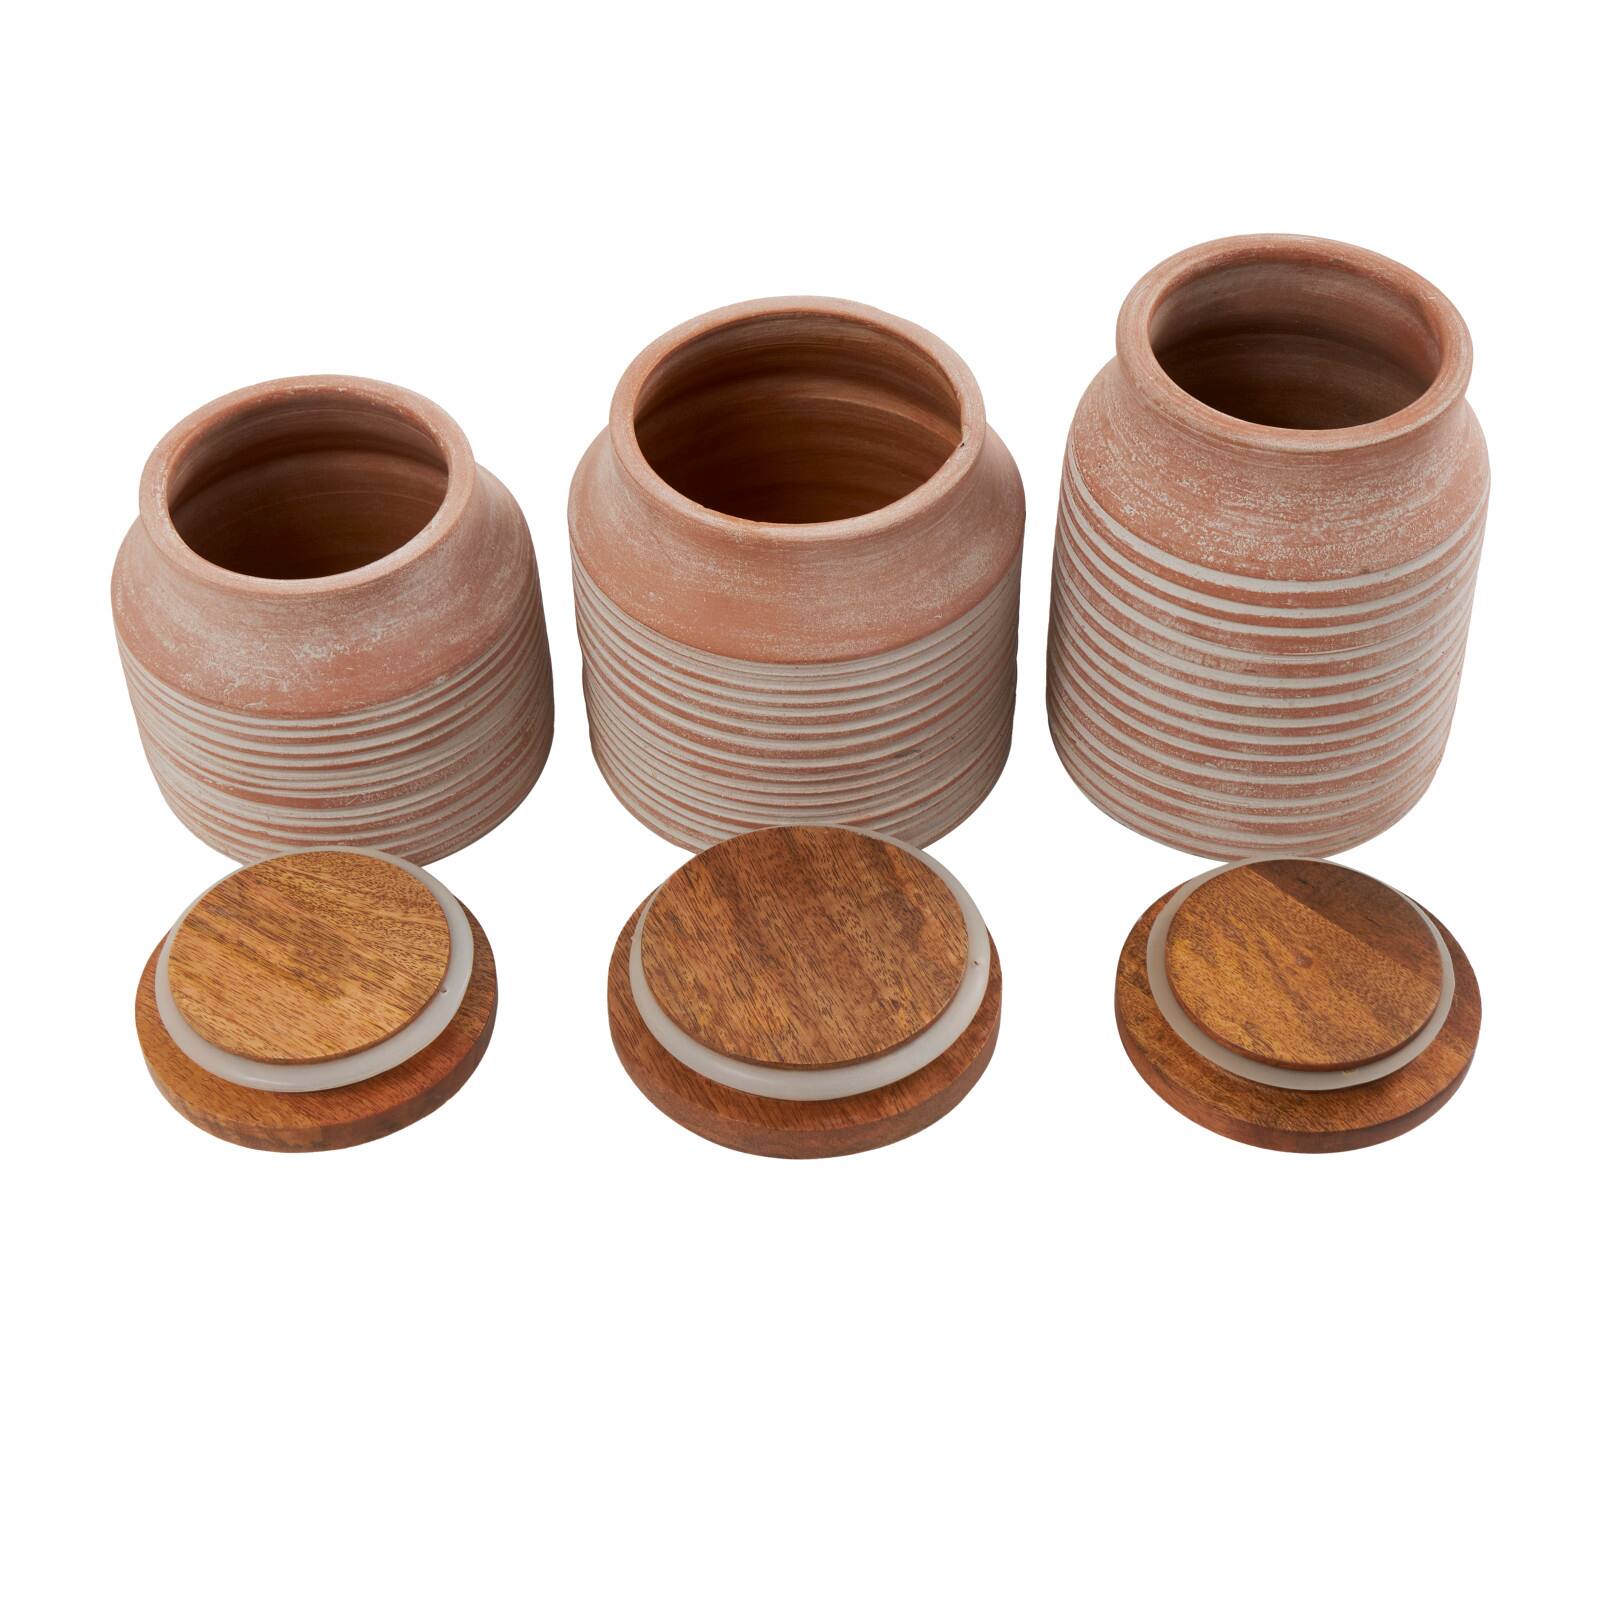 Light Brown Ceramic Decorative Jar Set